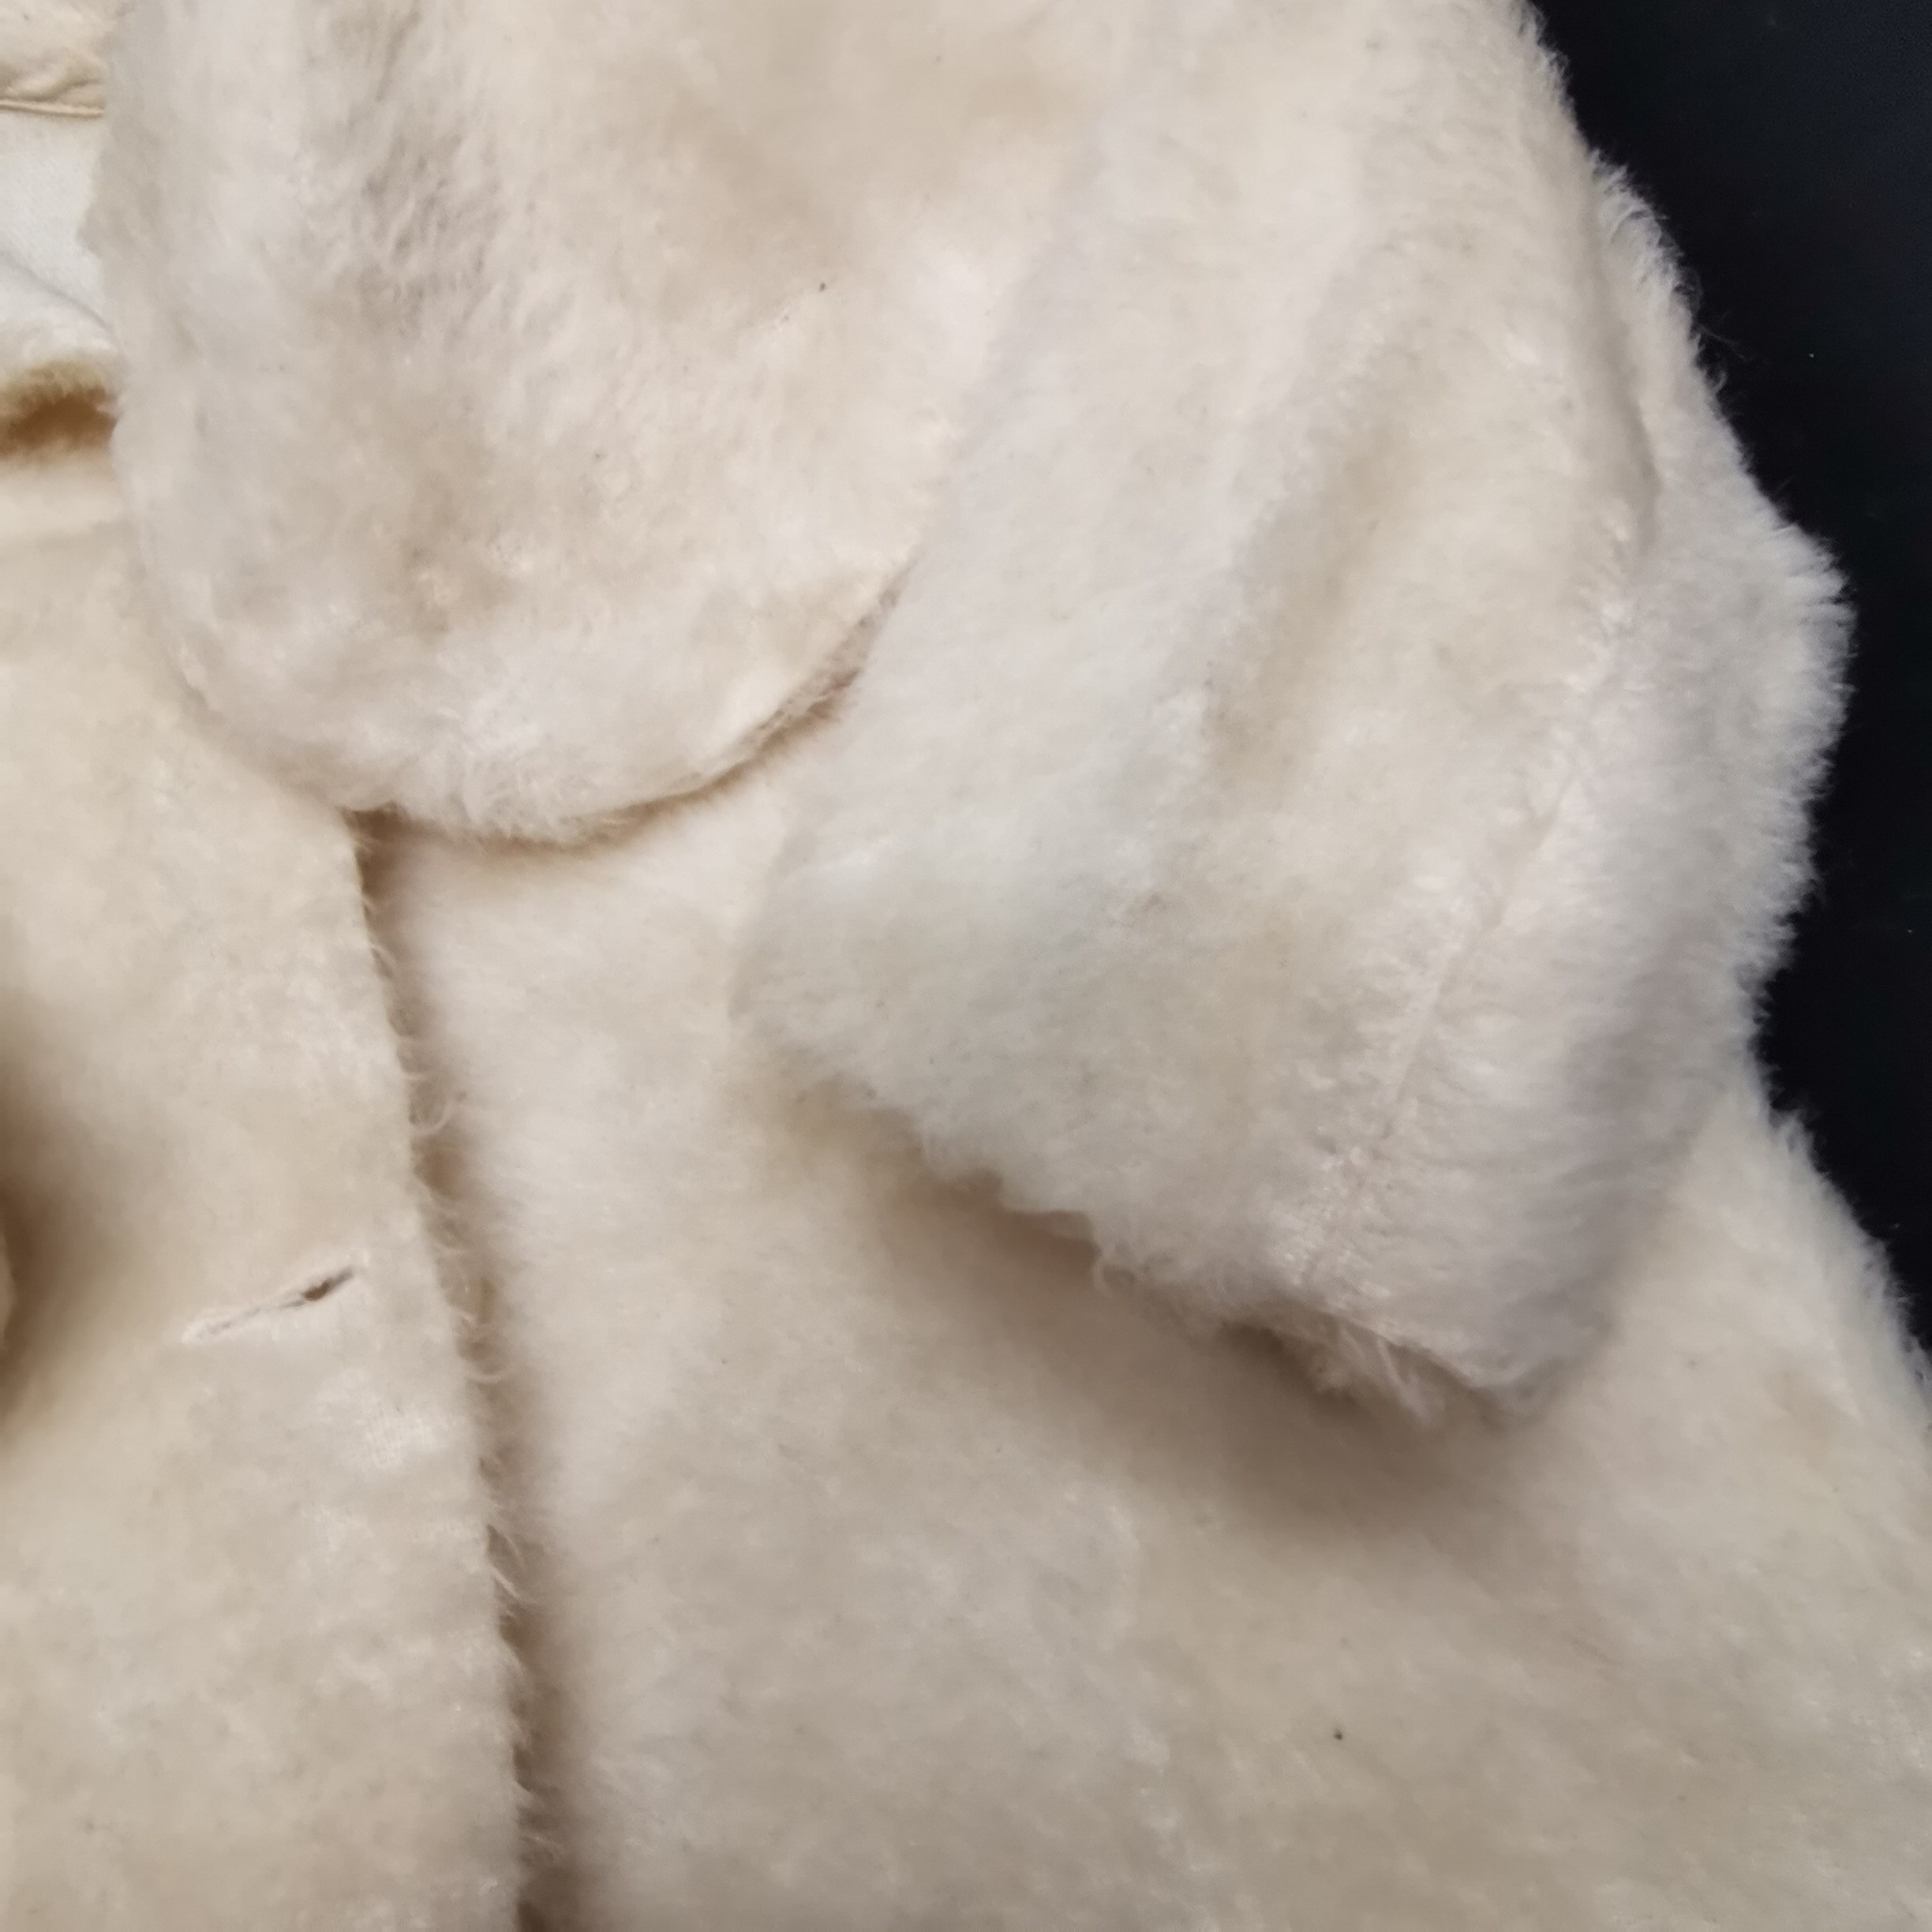 Childs cream fur fabric coat in good condition. - Image 2 of 2